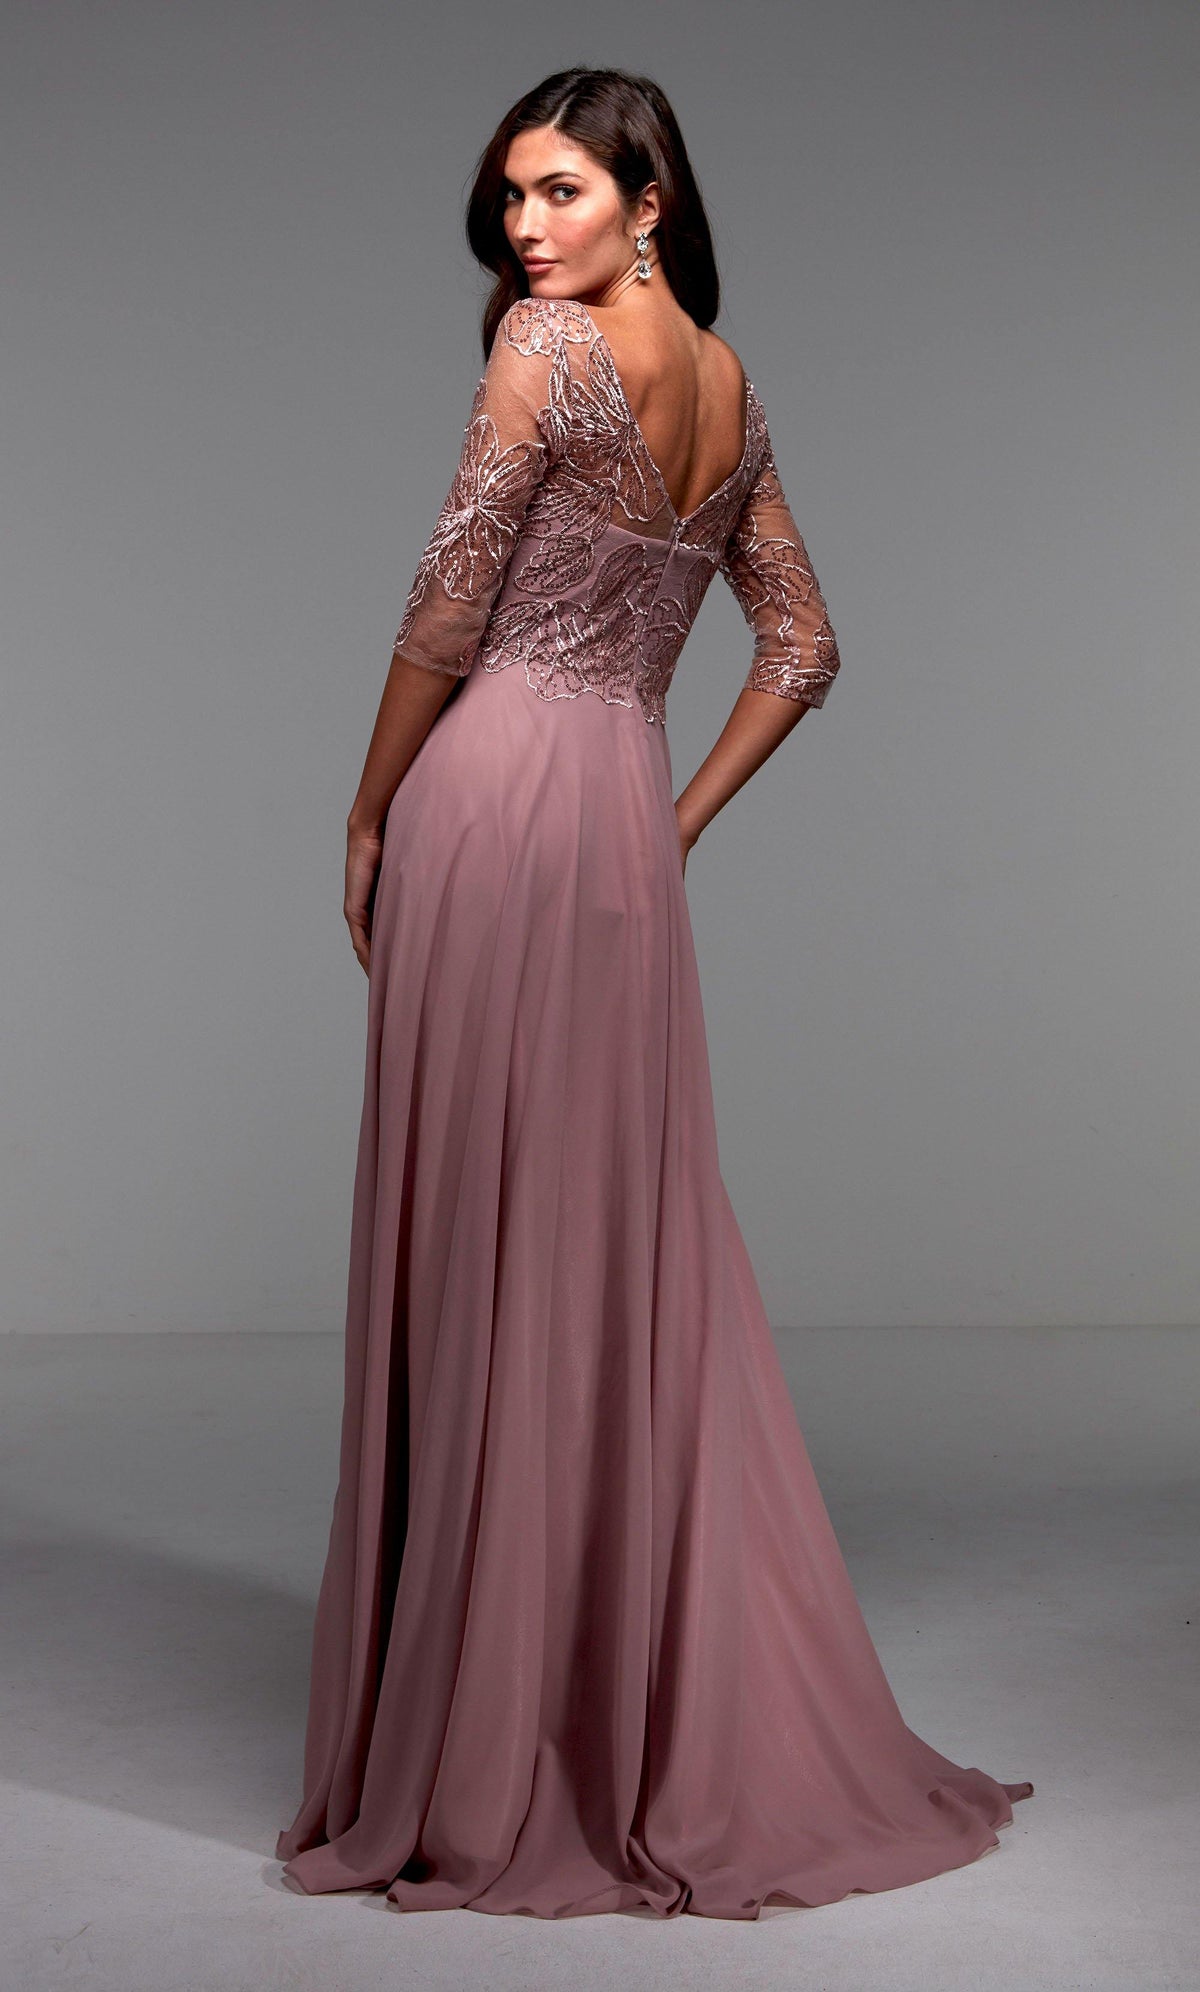 Formal Dress: 27475. Long Chiffon Dress, Illusion Neckline, Flowy Alyce Paris